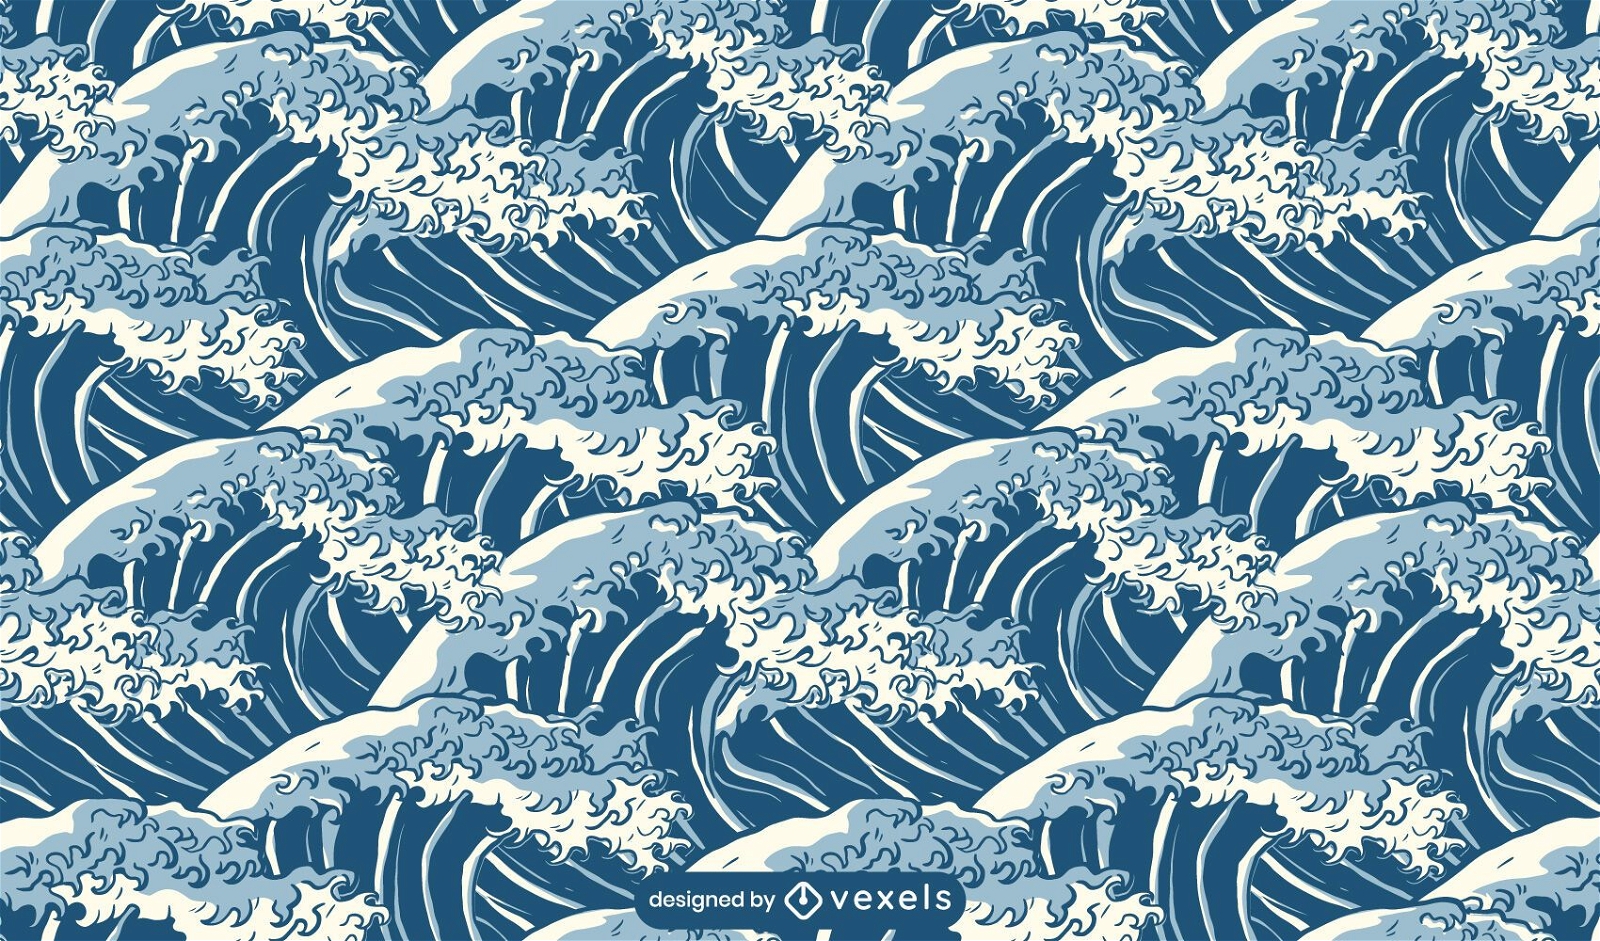 ocean wave stencil template